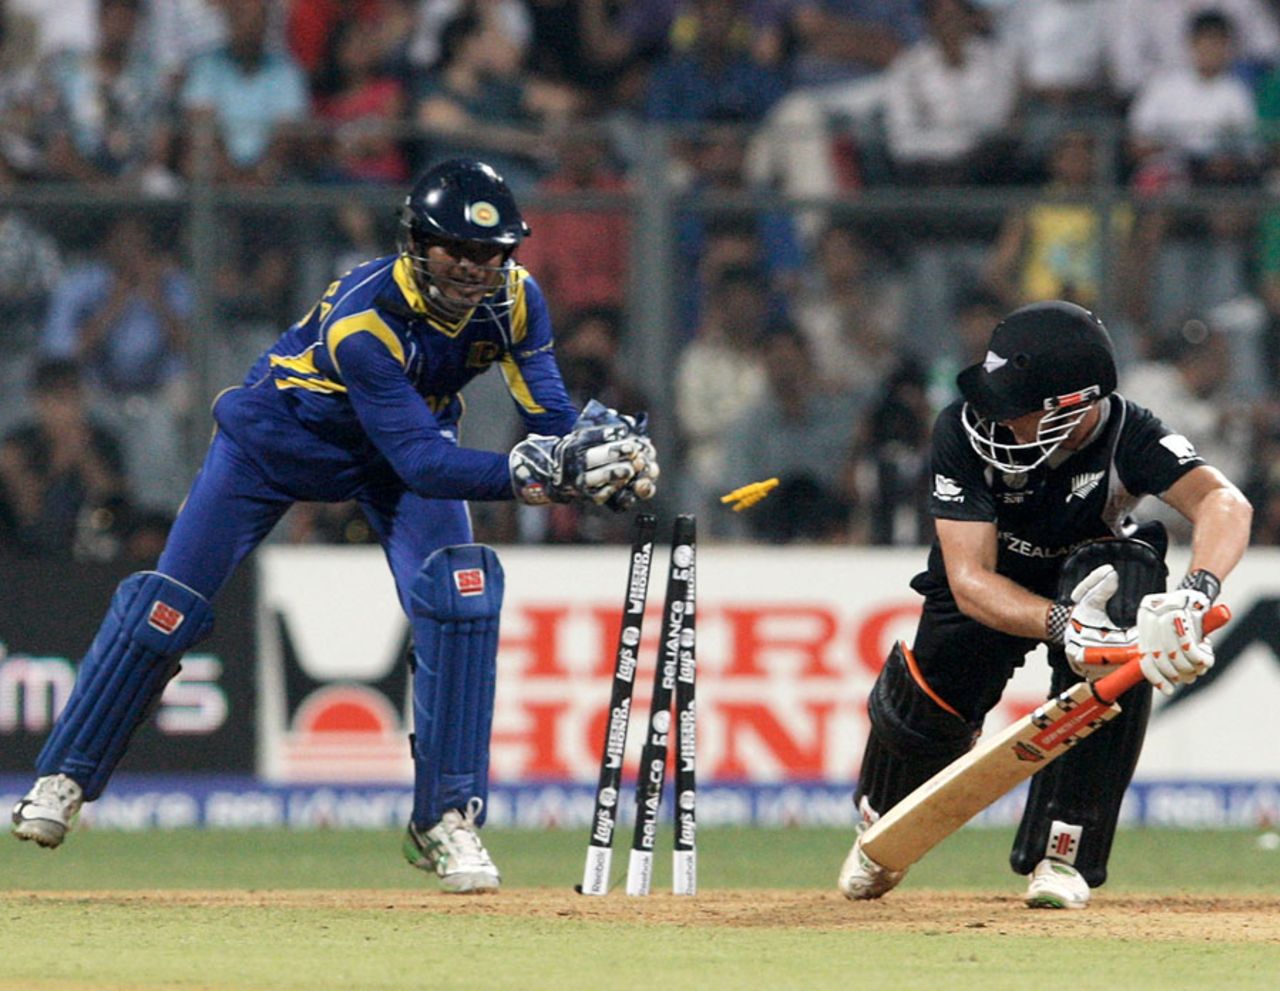 Kane Williamson is stumped by Kumar Sangakkara, New Zealand v Sri Lanka, Group A, World Cup 2011, Mumbai, March 18, 2011